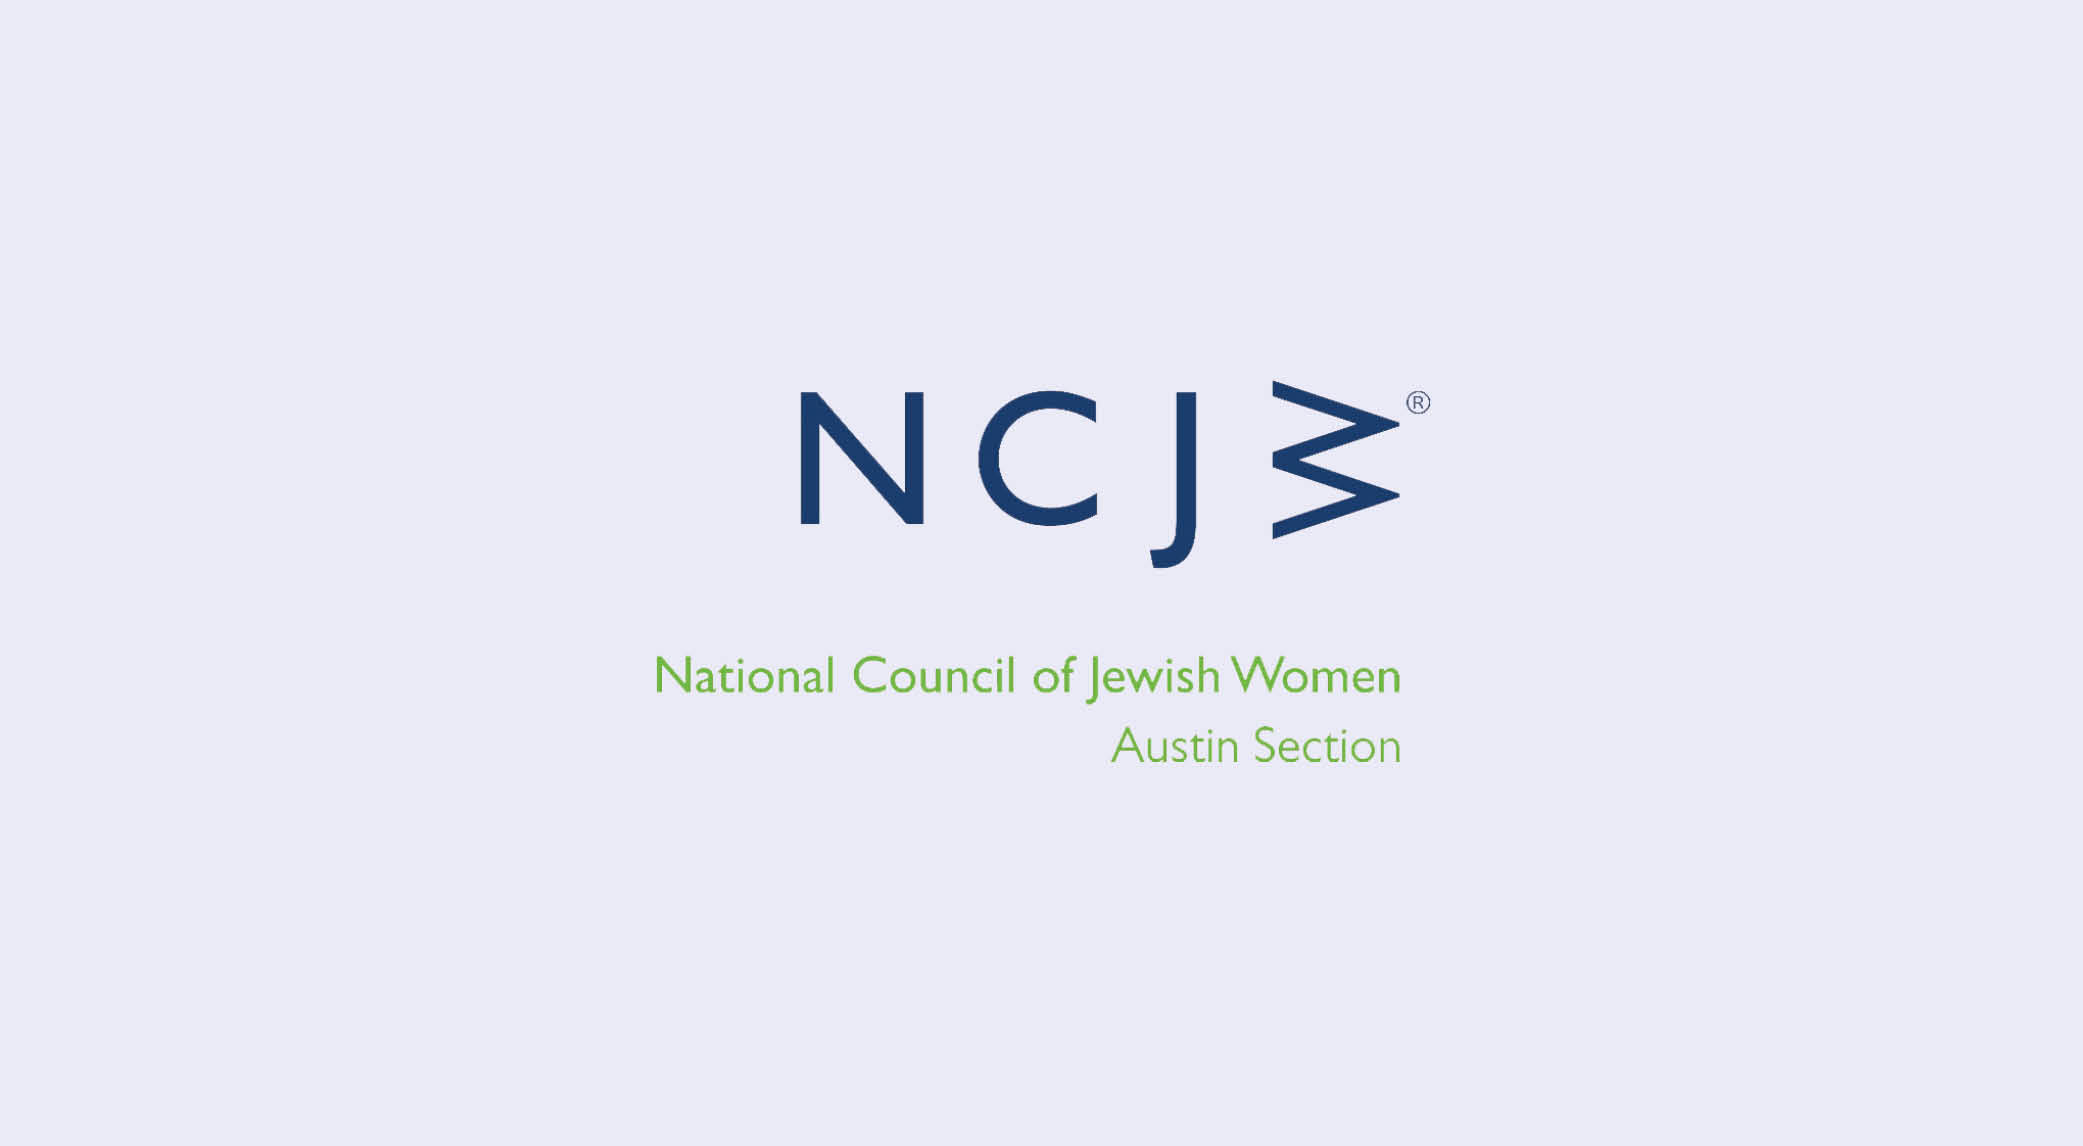 ncjw logo